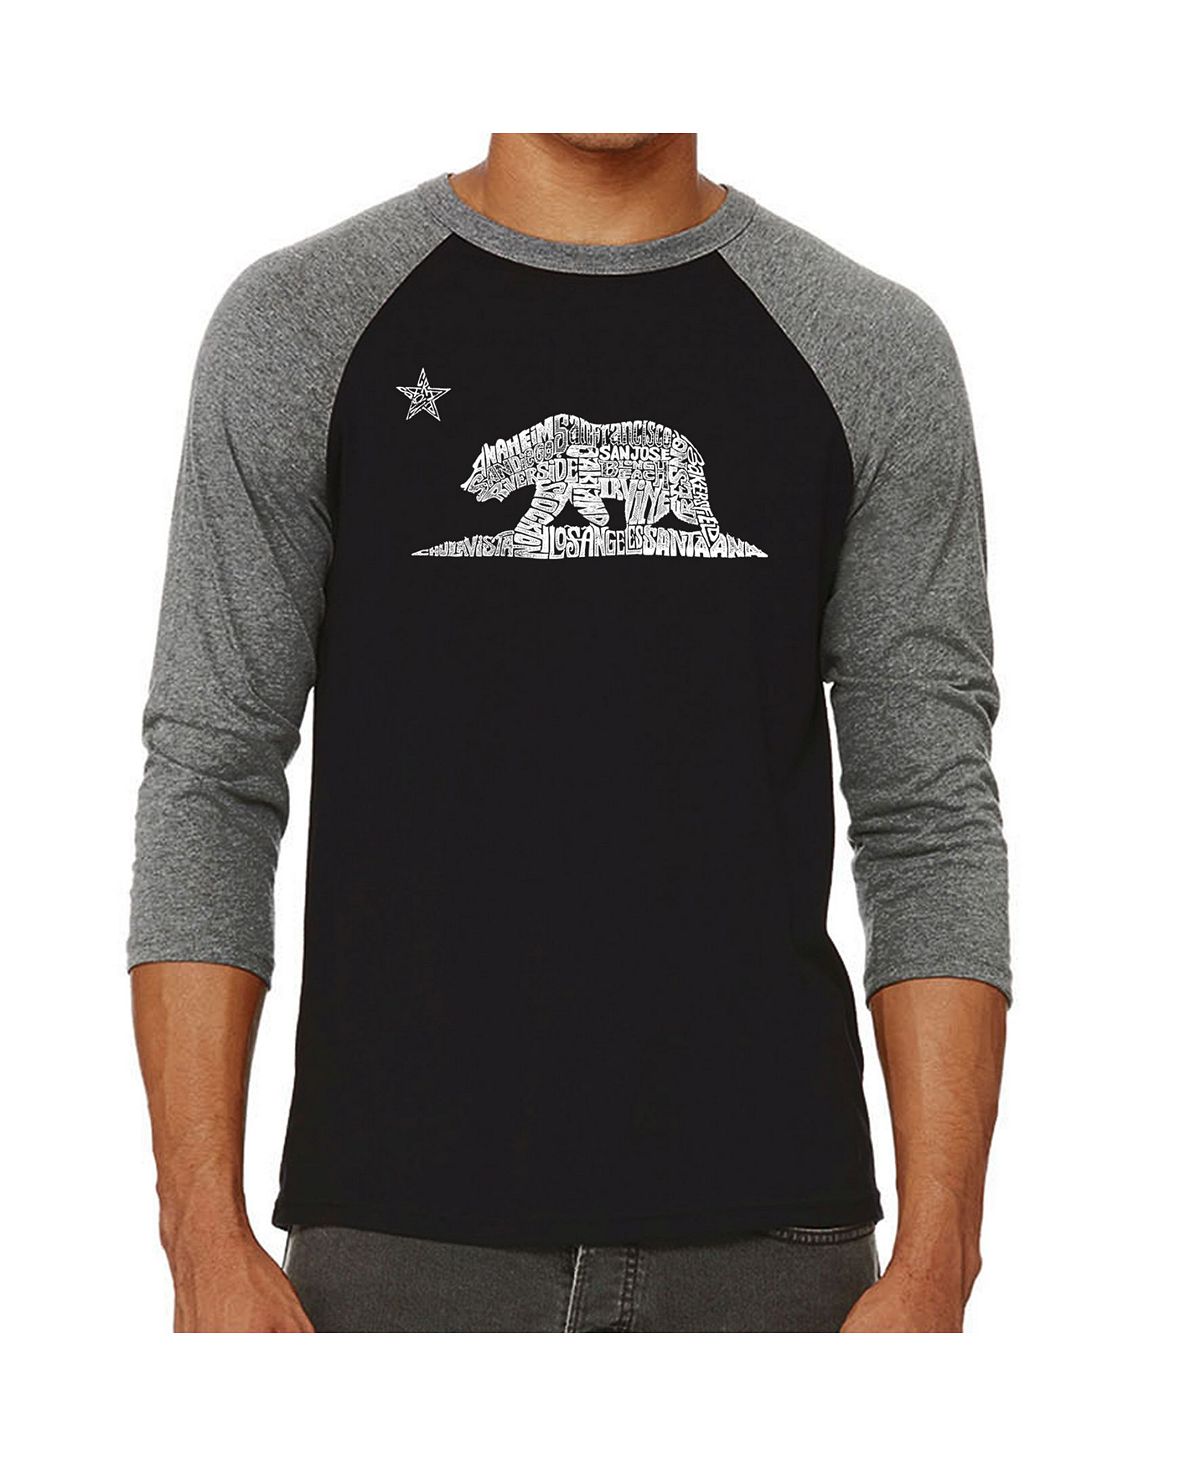 Мужская футболка реглан Word Art California Bear LA Pop Art мужская футболка с надписью california dreaming реглан word art la pop art серый